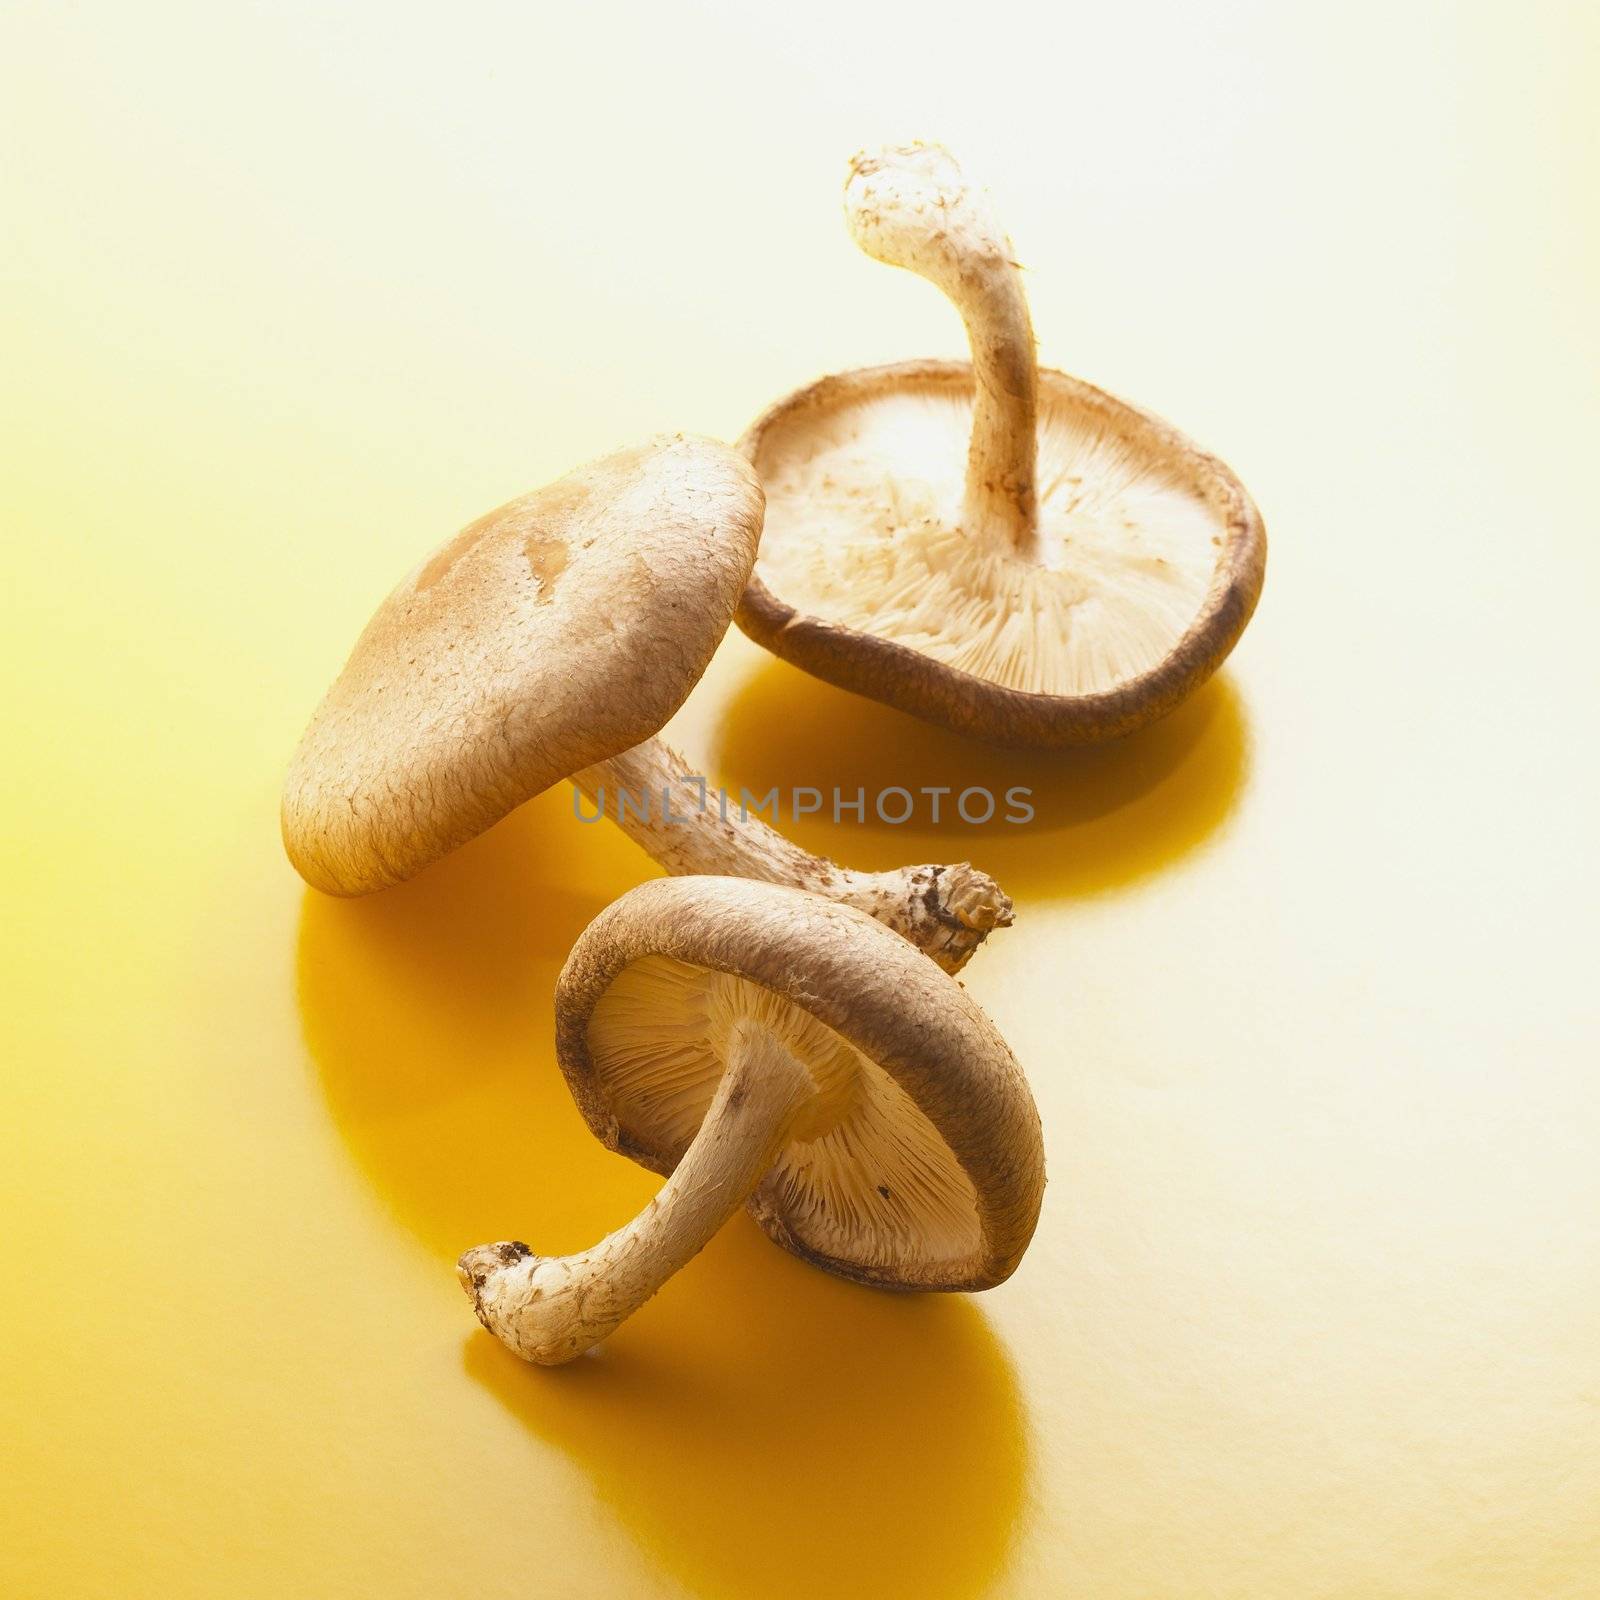 Shiitake Mushrooms by tornellistefano